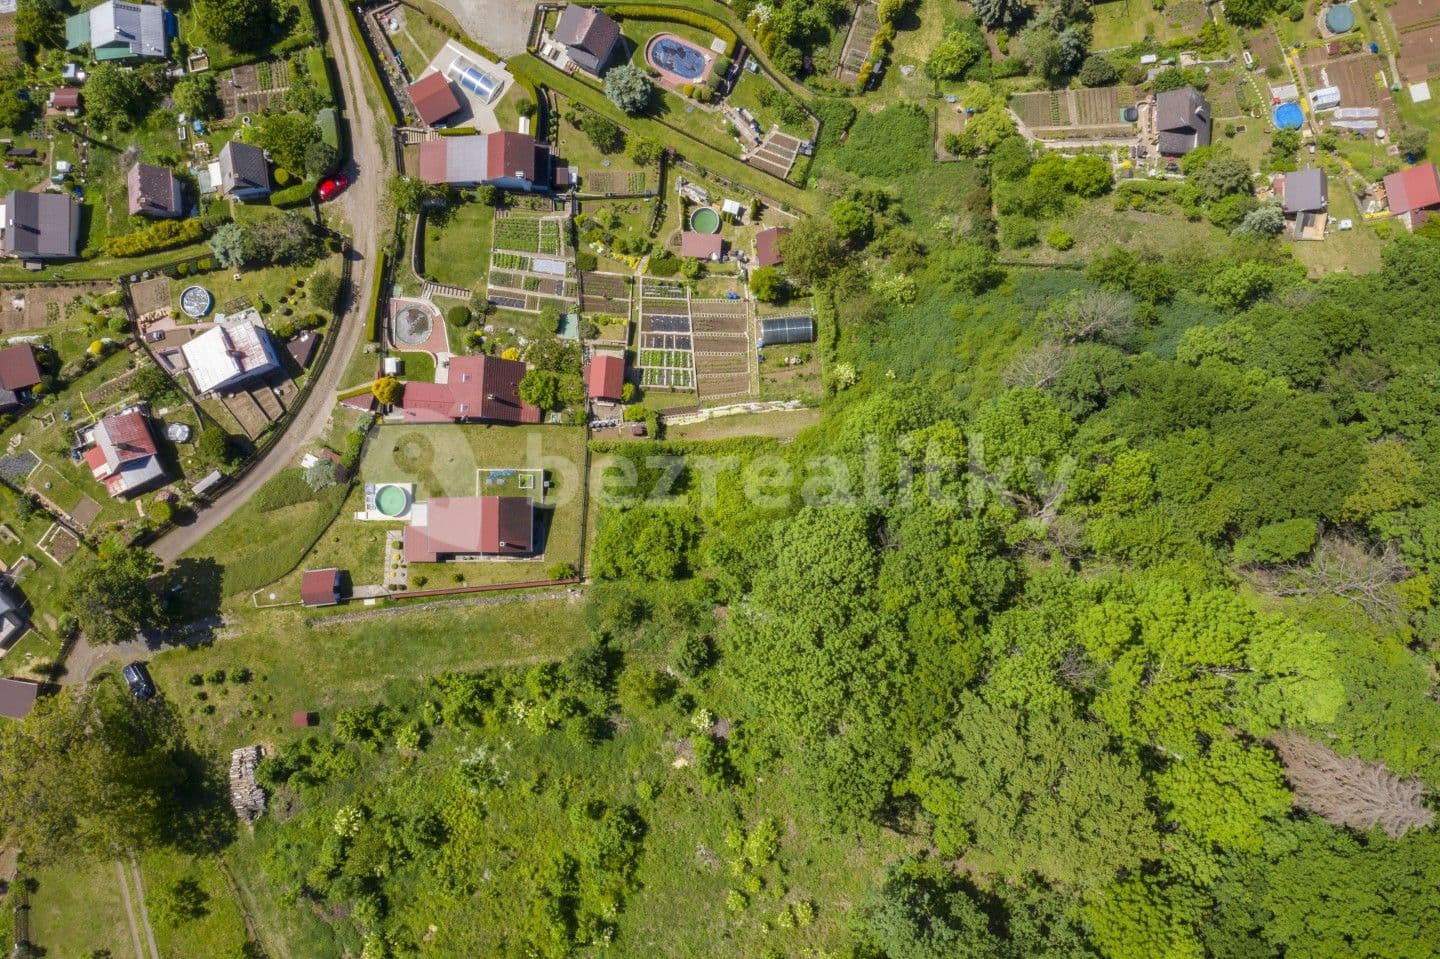 plot for sale, 610 m², Ryjice, Ústecký Region